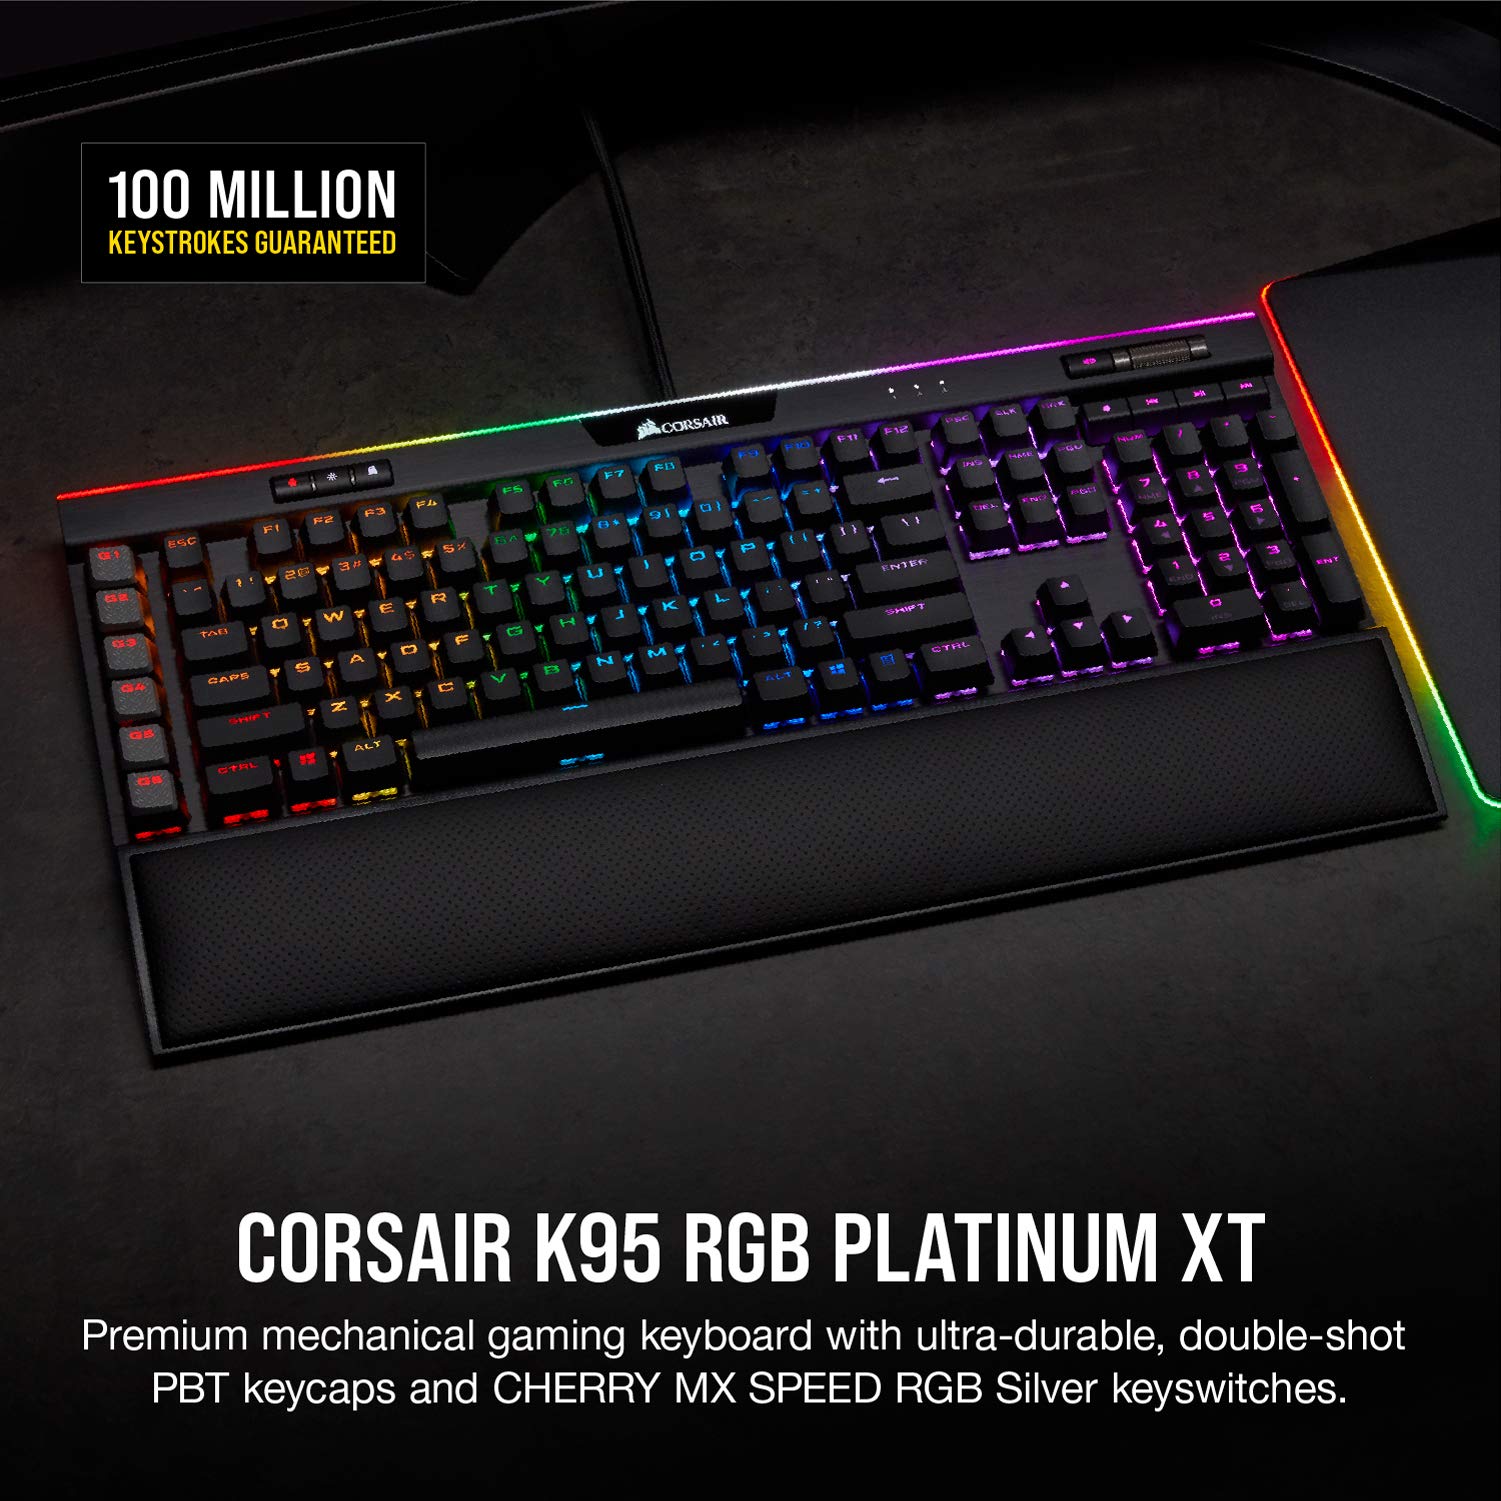 Corsair K95 Rgb Platinum Xt Mechanical Gaming Keyboard Backlit Rgb Le Lowper